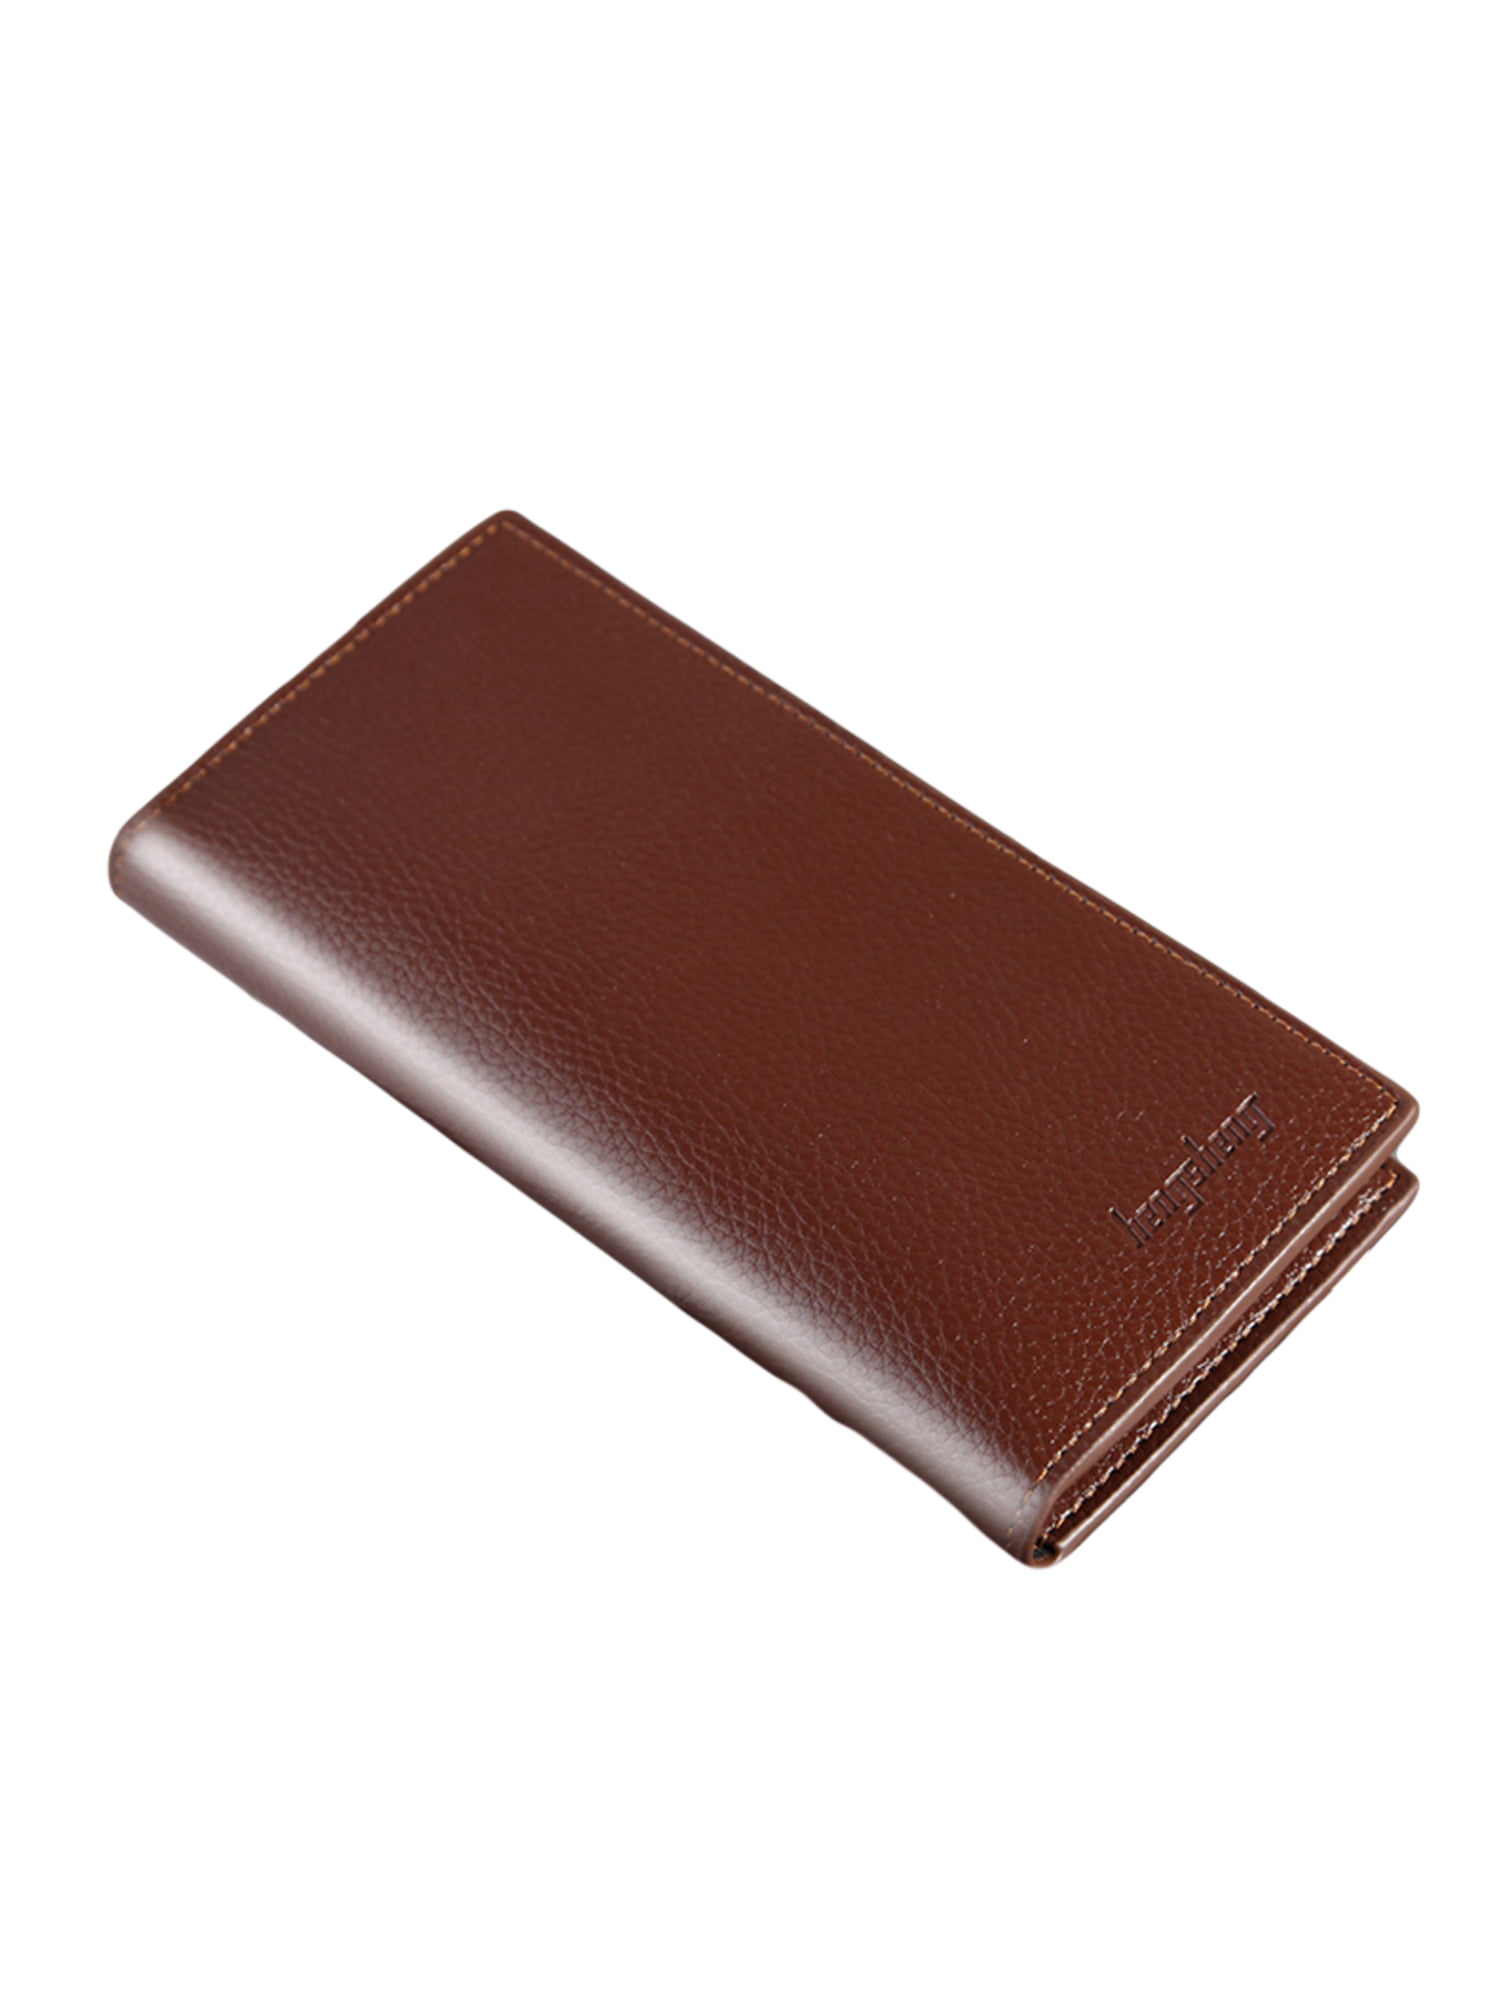 Handmade Cow Leather Card Purse Tan Brown Bi-fold Light Pocket Wallet Holder 